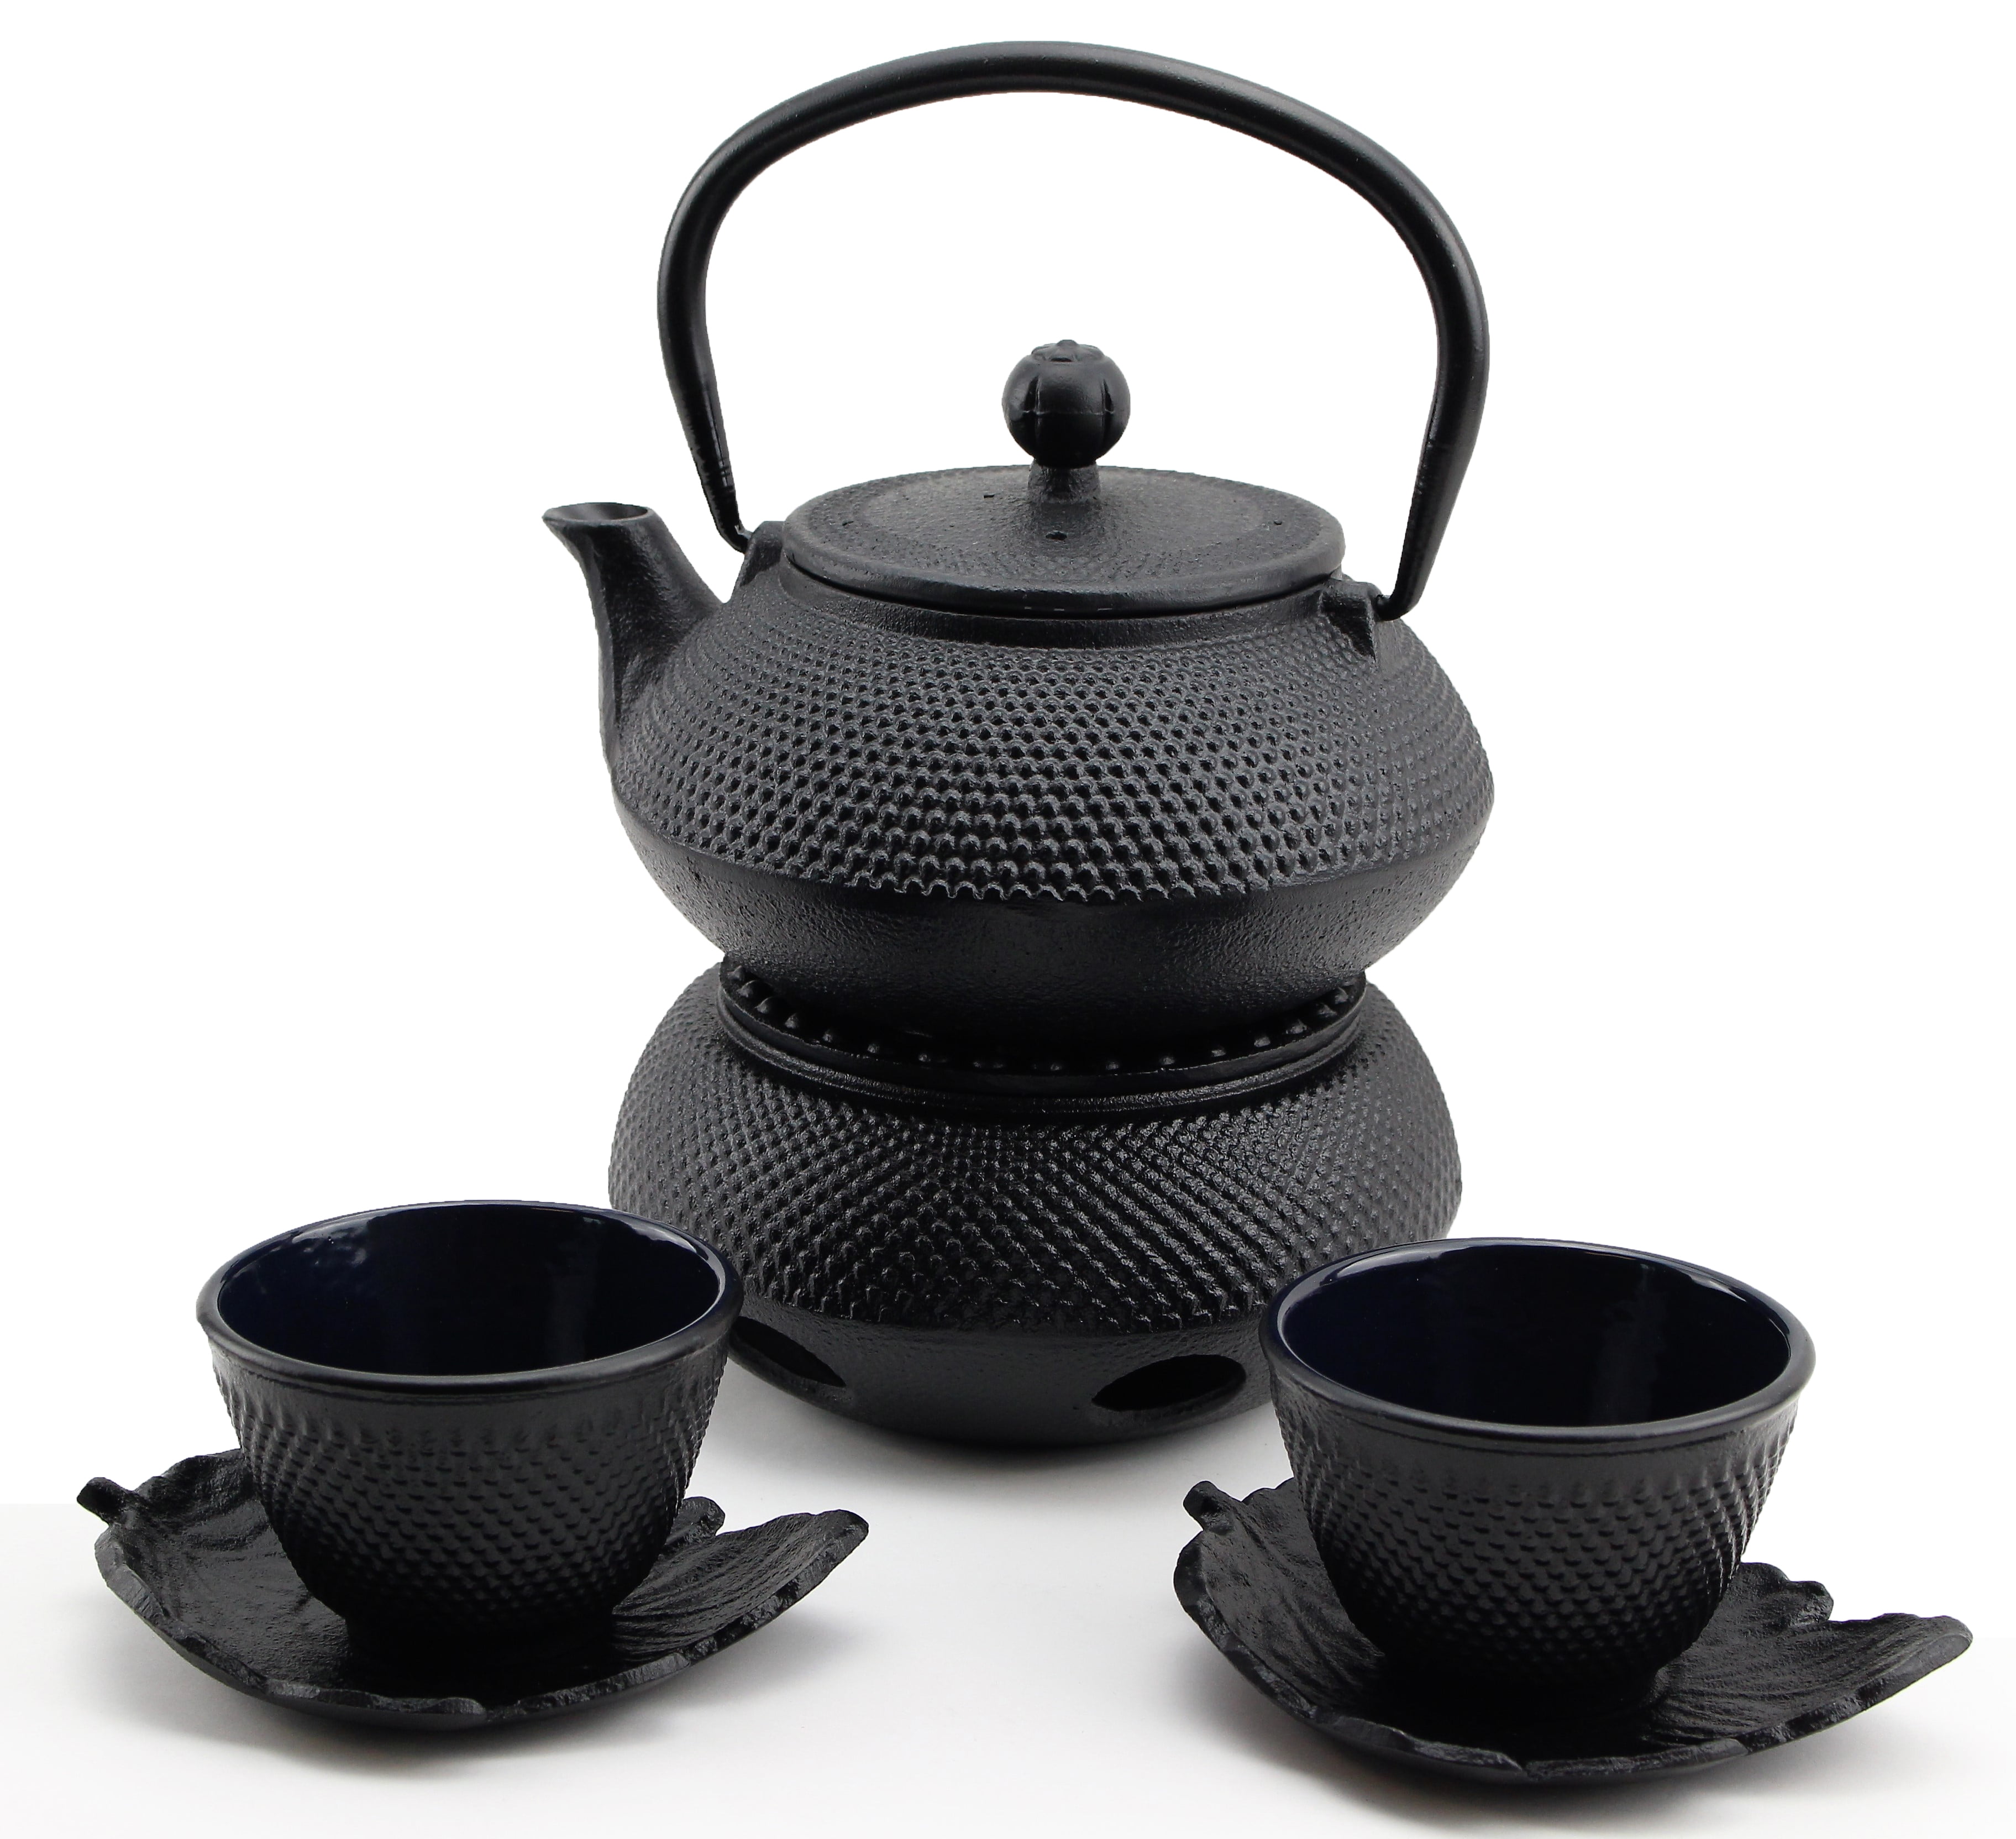 Tetsubin 43 oz Black Cast Iron Osaka Teapot - Wooden Handle and Knob - 7 1/2 inch x 6 inch x 5 inch - 1 Count Box